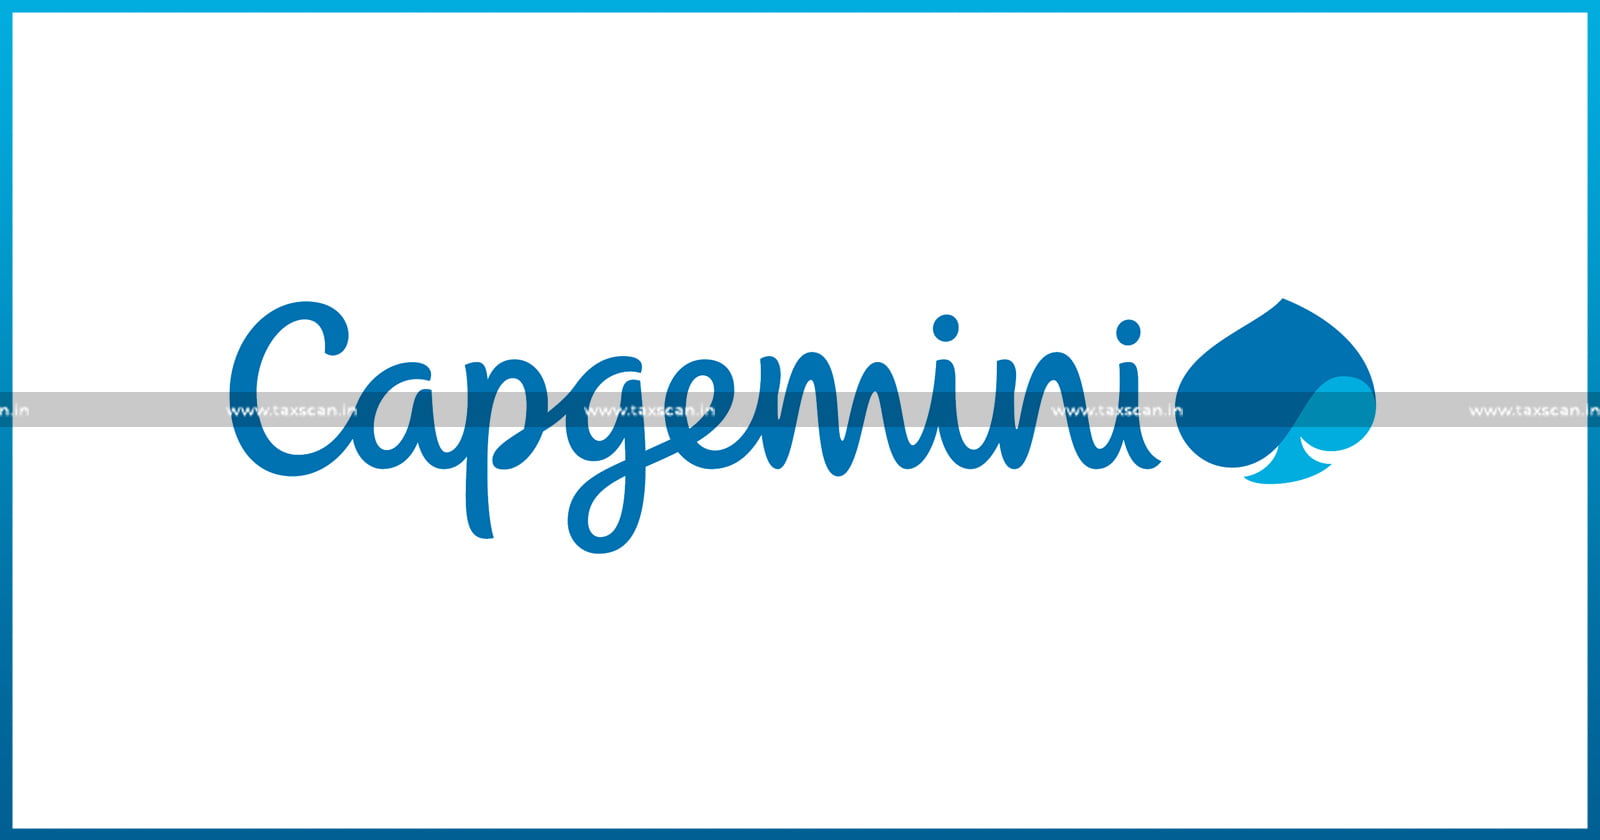 Finance Accounting Vacancy - Capgemini - Finance Accounting - Accounting - Vacancy in Capgemini - Jobscan - taxscan